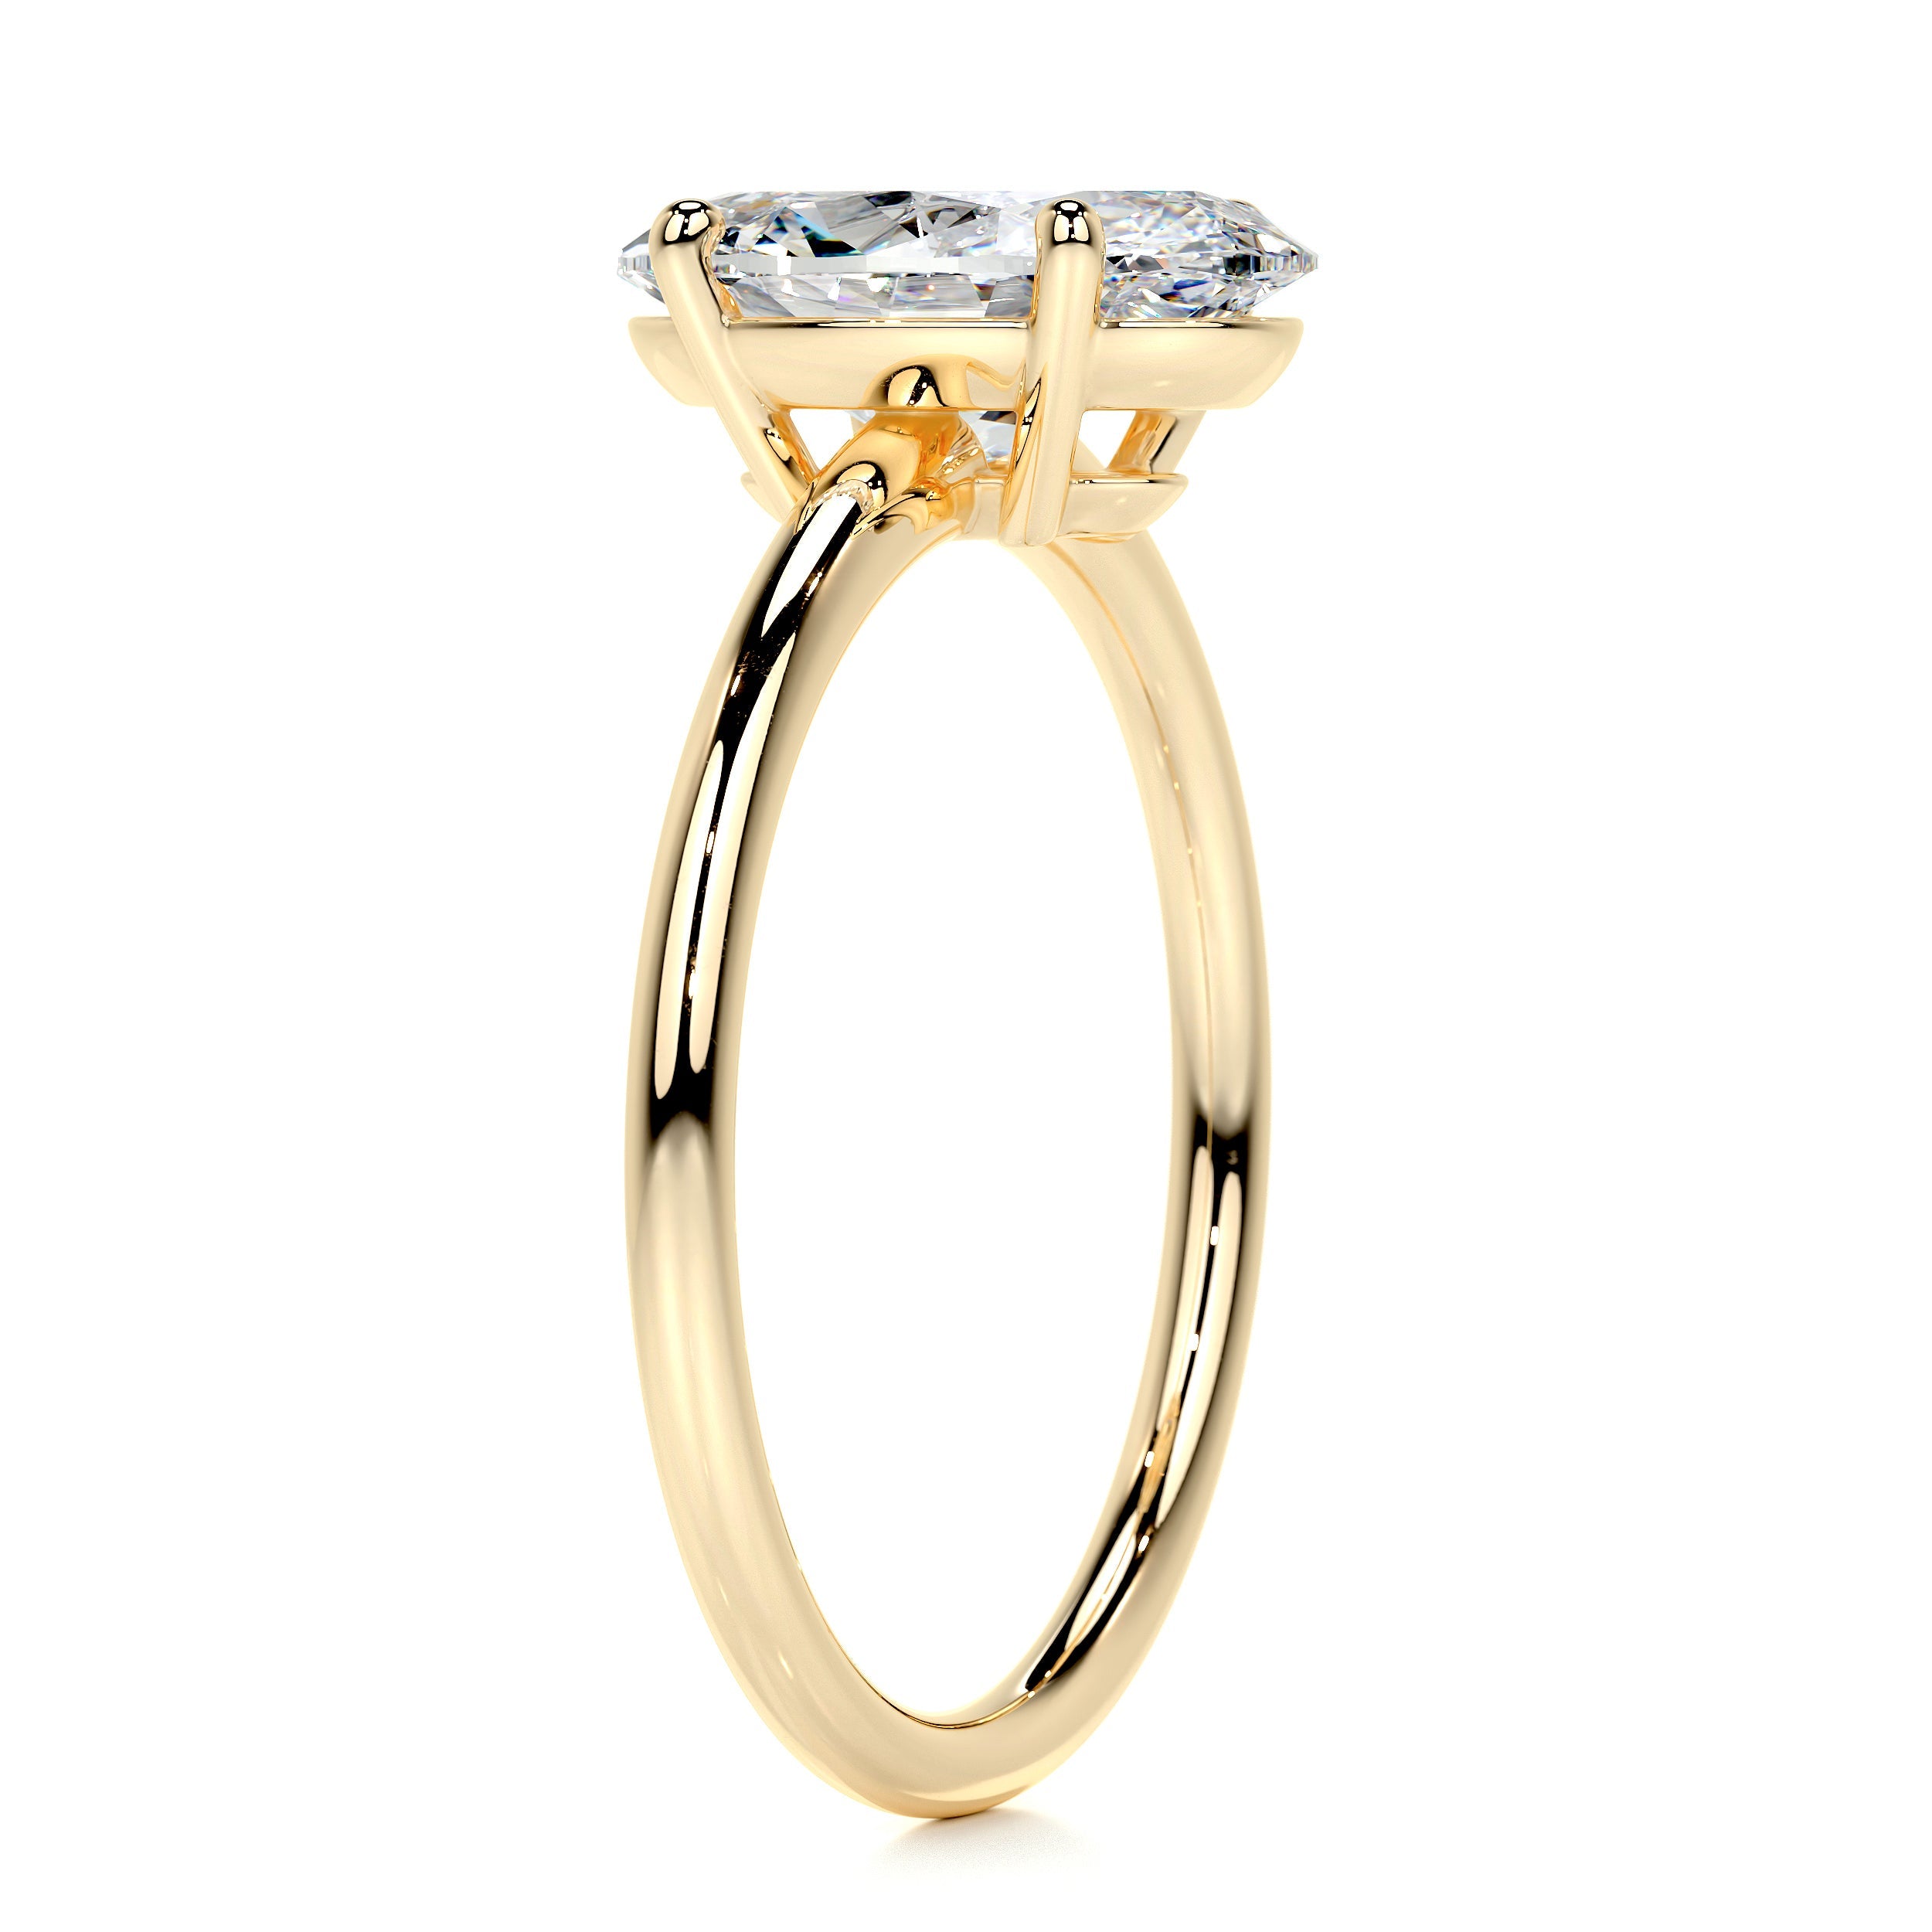 Adaline Diamond Engagement Ring   (1.5 Carat) -18K Yellow Gold (RTS)